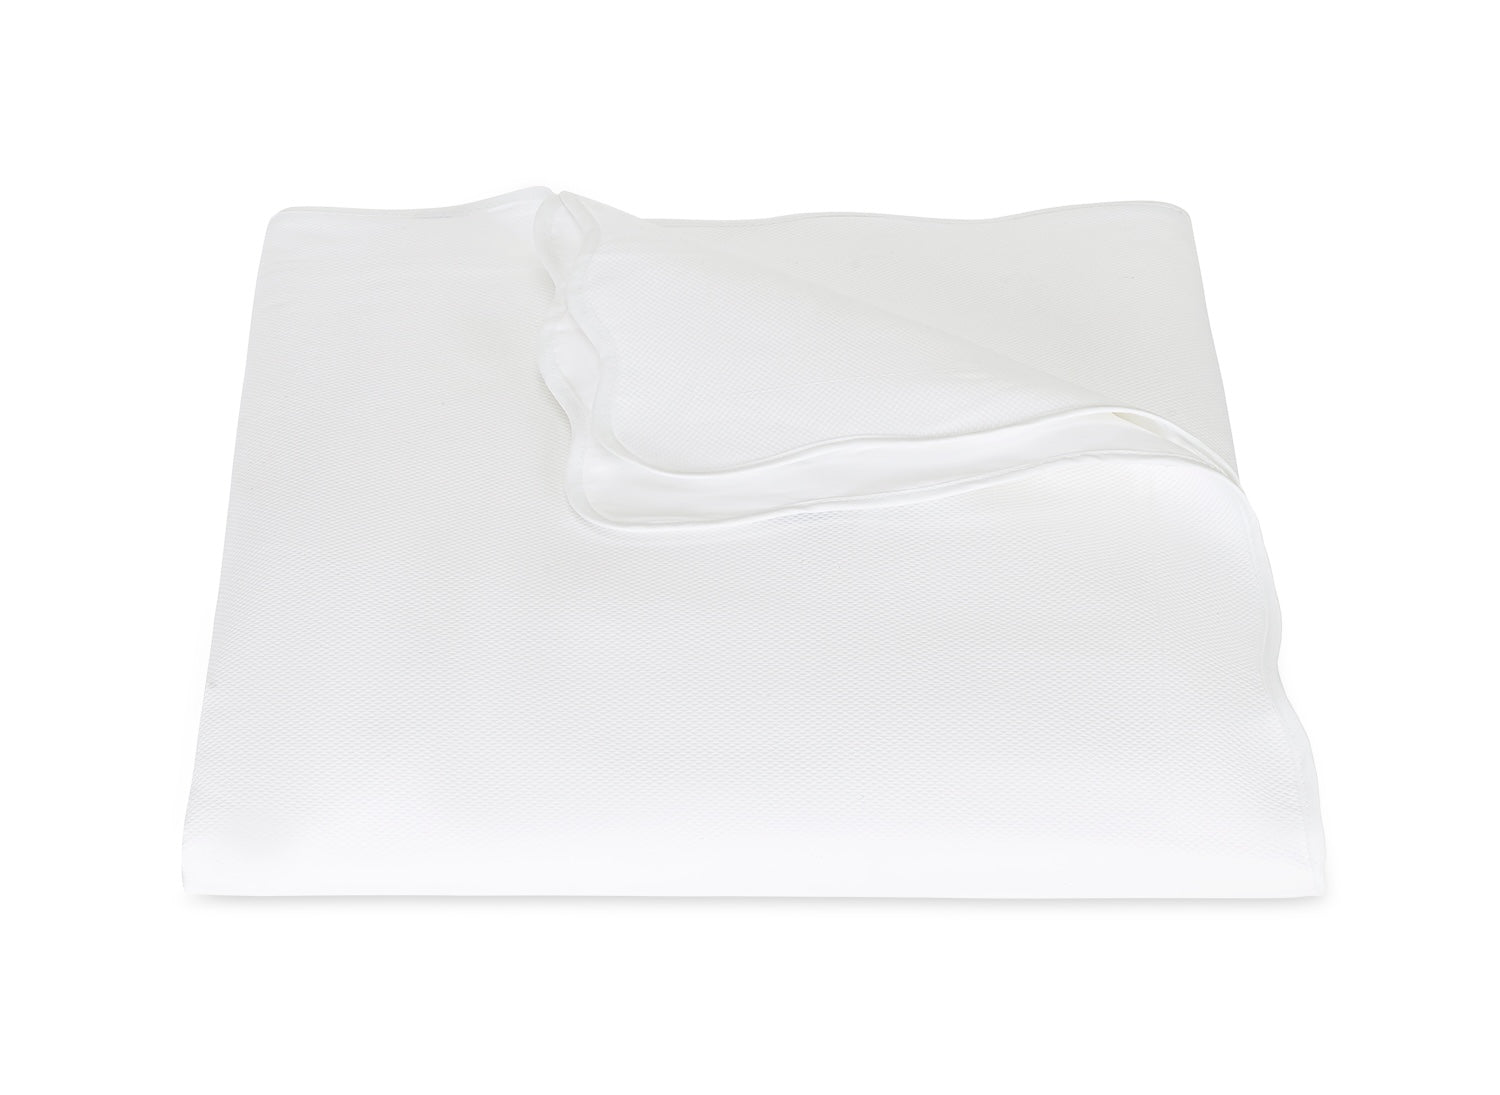 Duvet Cover - Matouk Camila Pique White Bedding at Fig Linens and Home